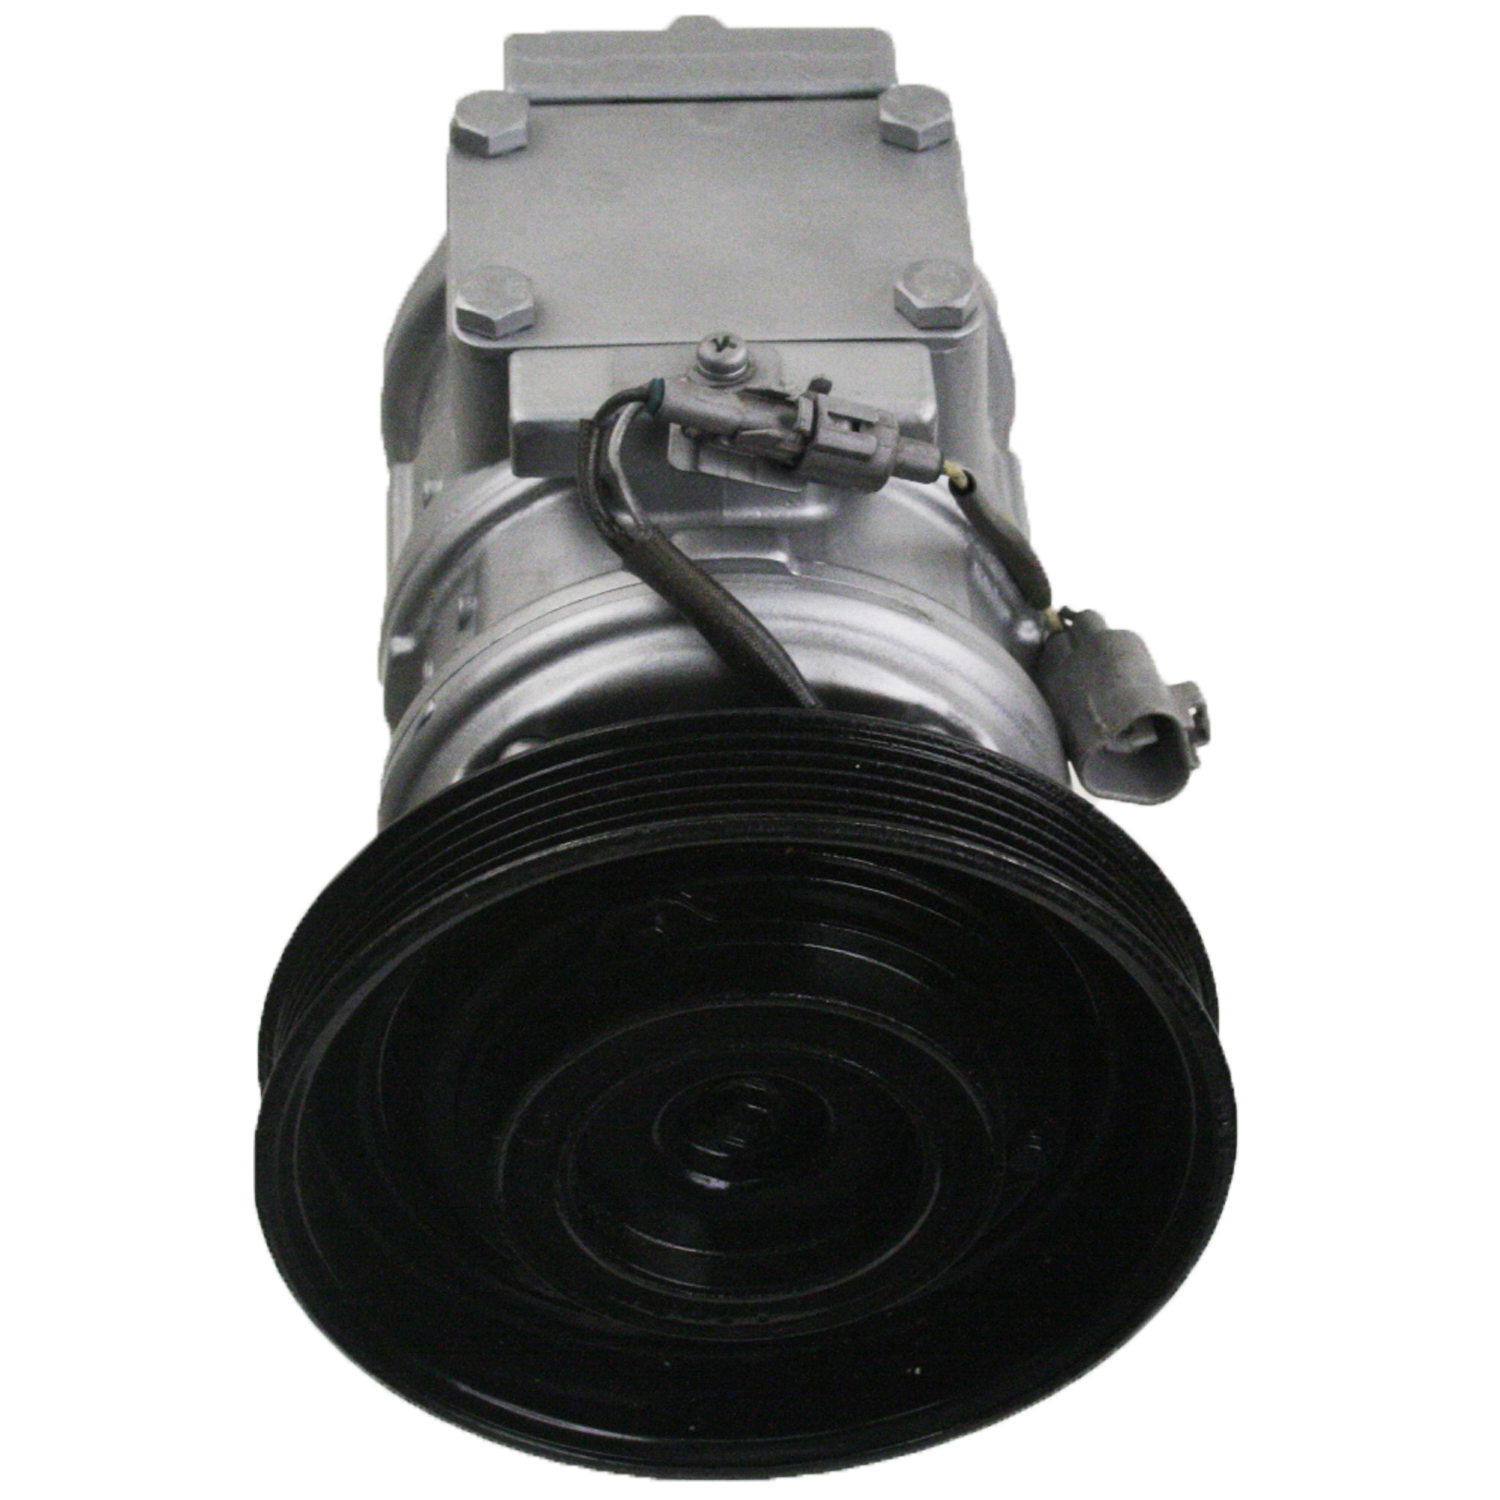 TCW Compressor 31012.401 Remanufactured Product Image field_60b6a13a6e67c